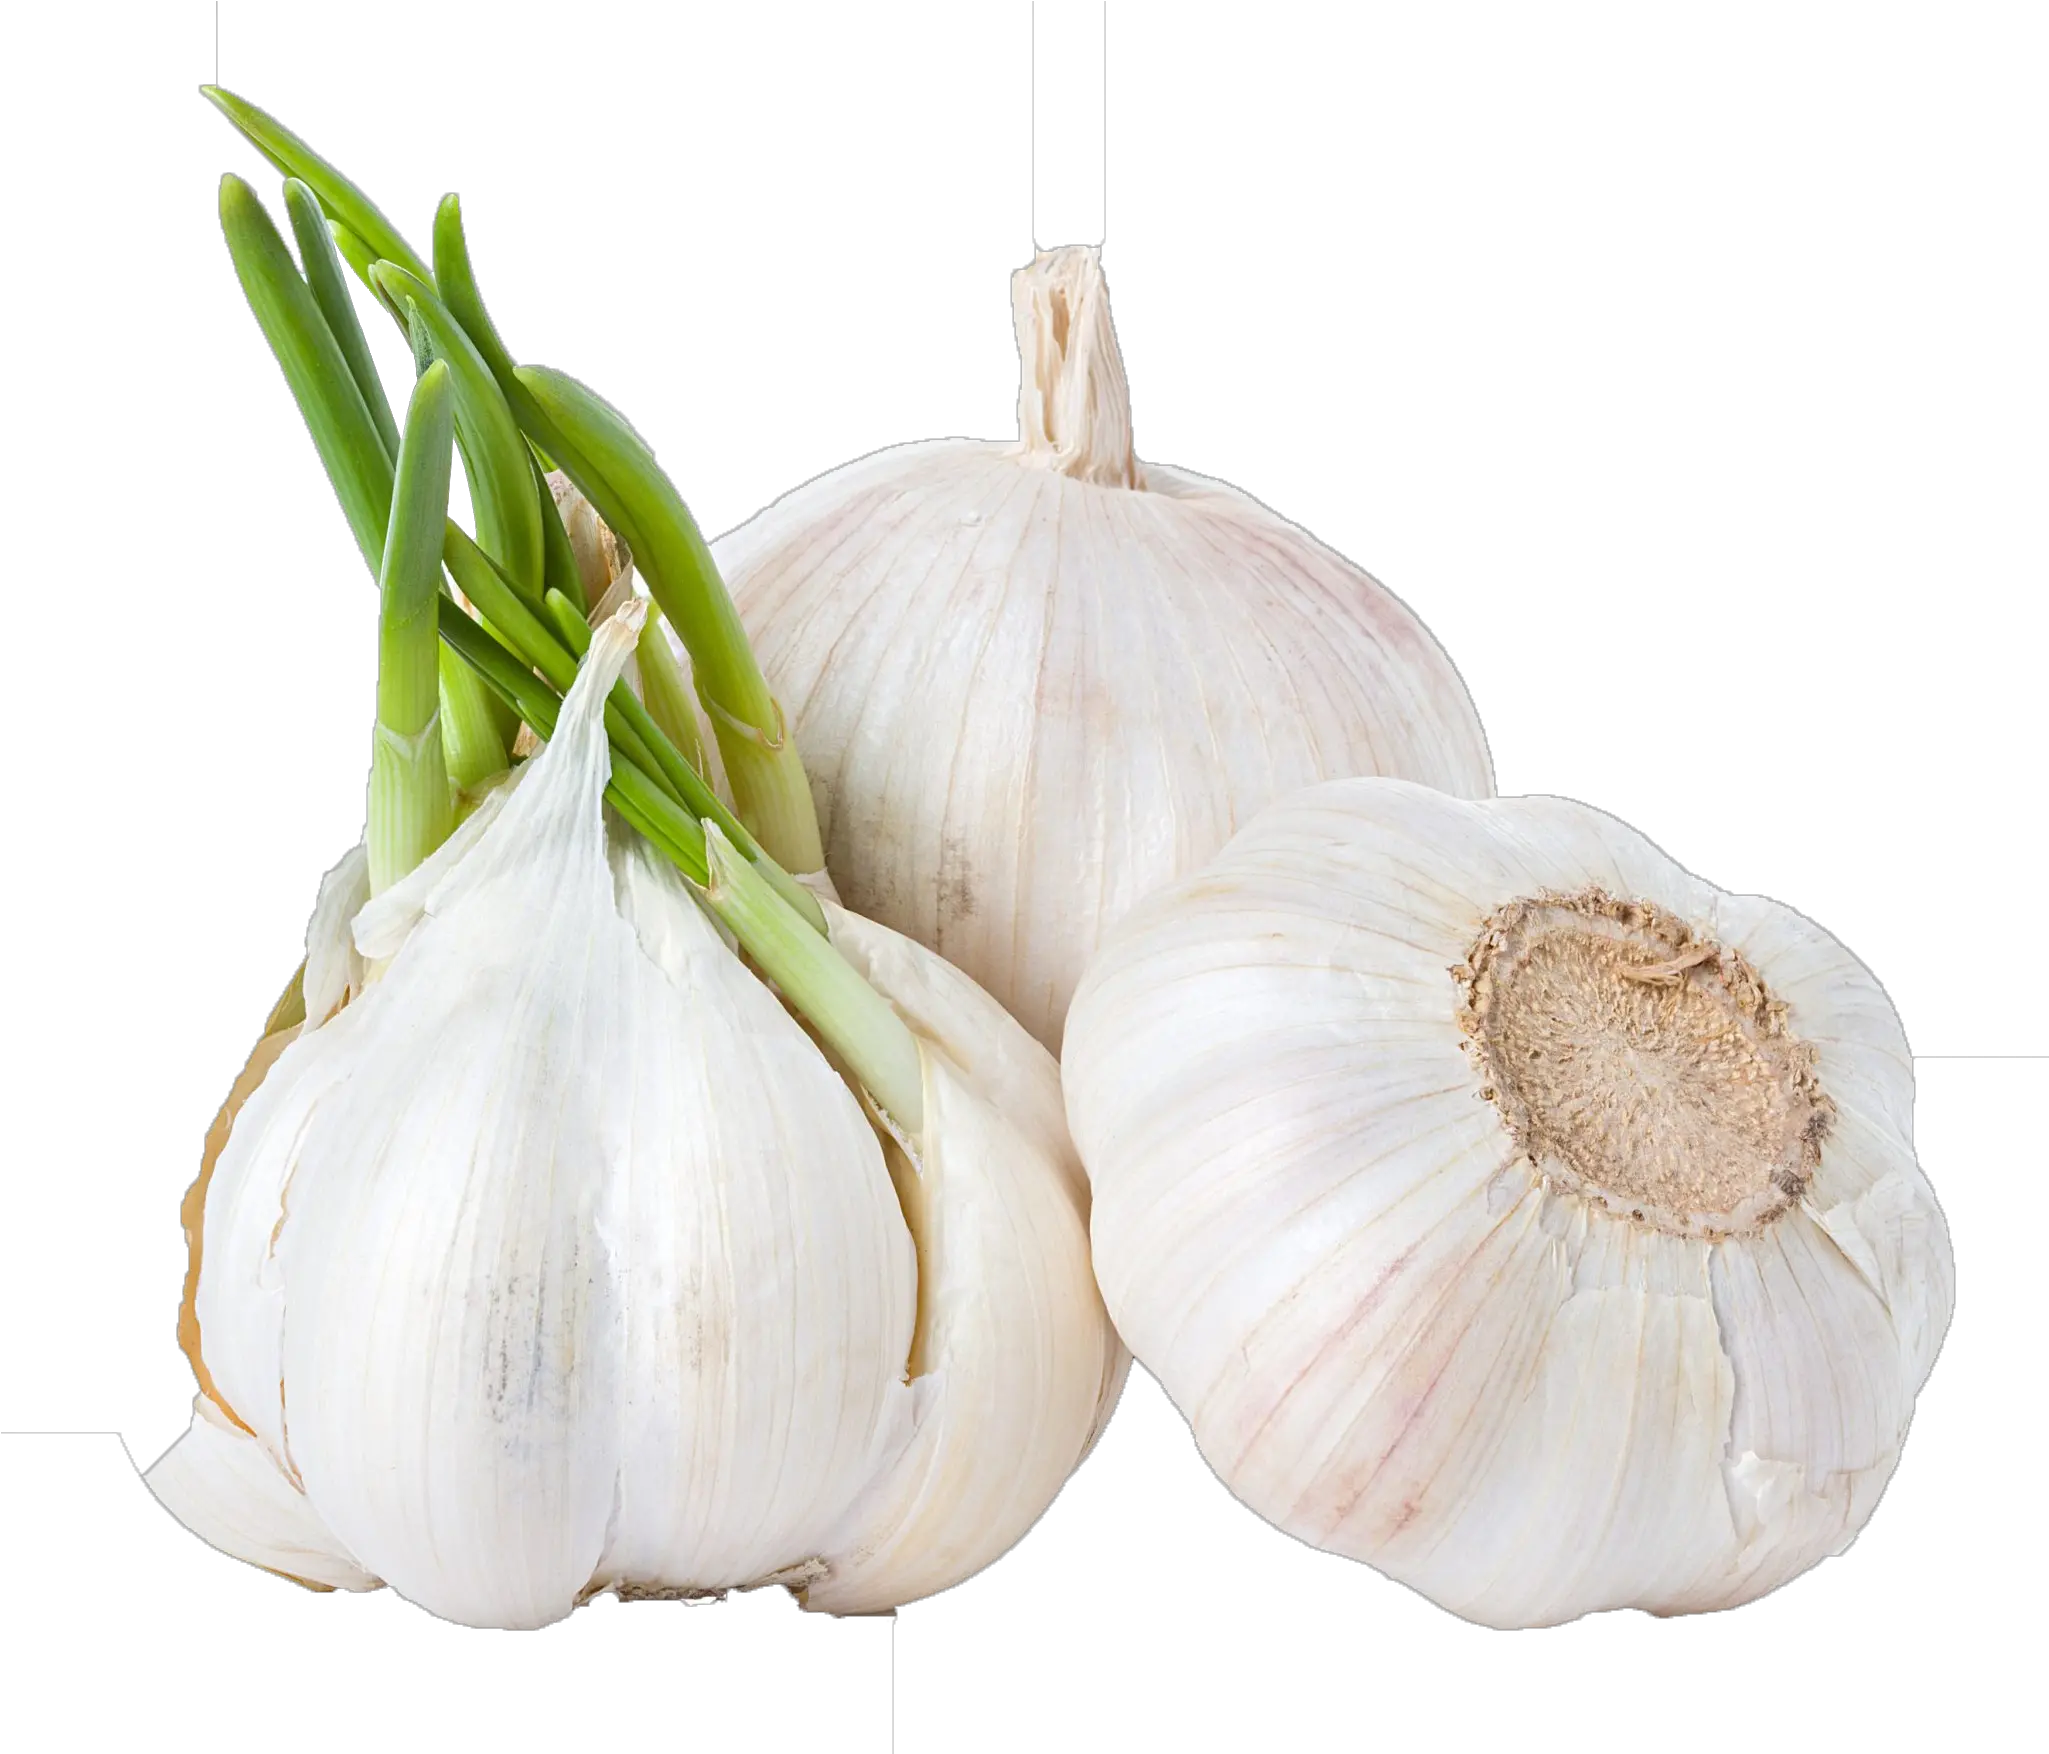 Download Garlic Png Background Clipart Transparent